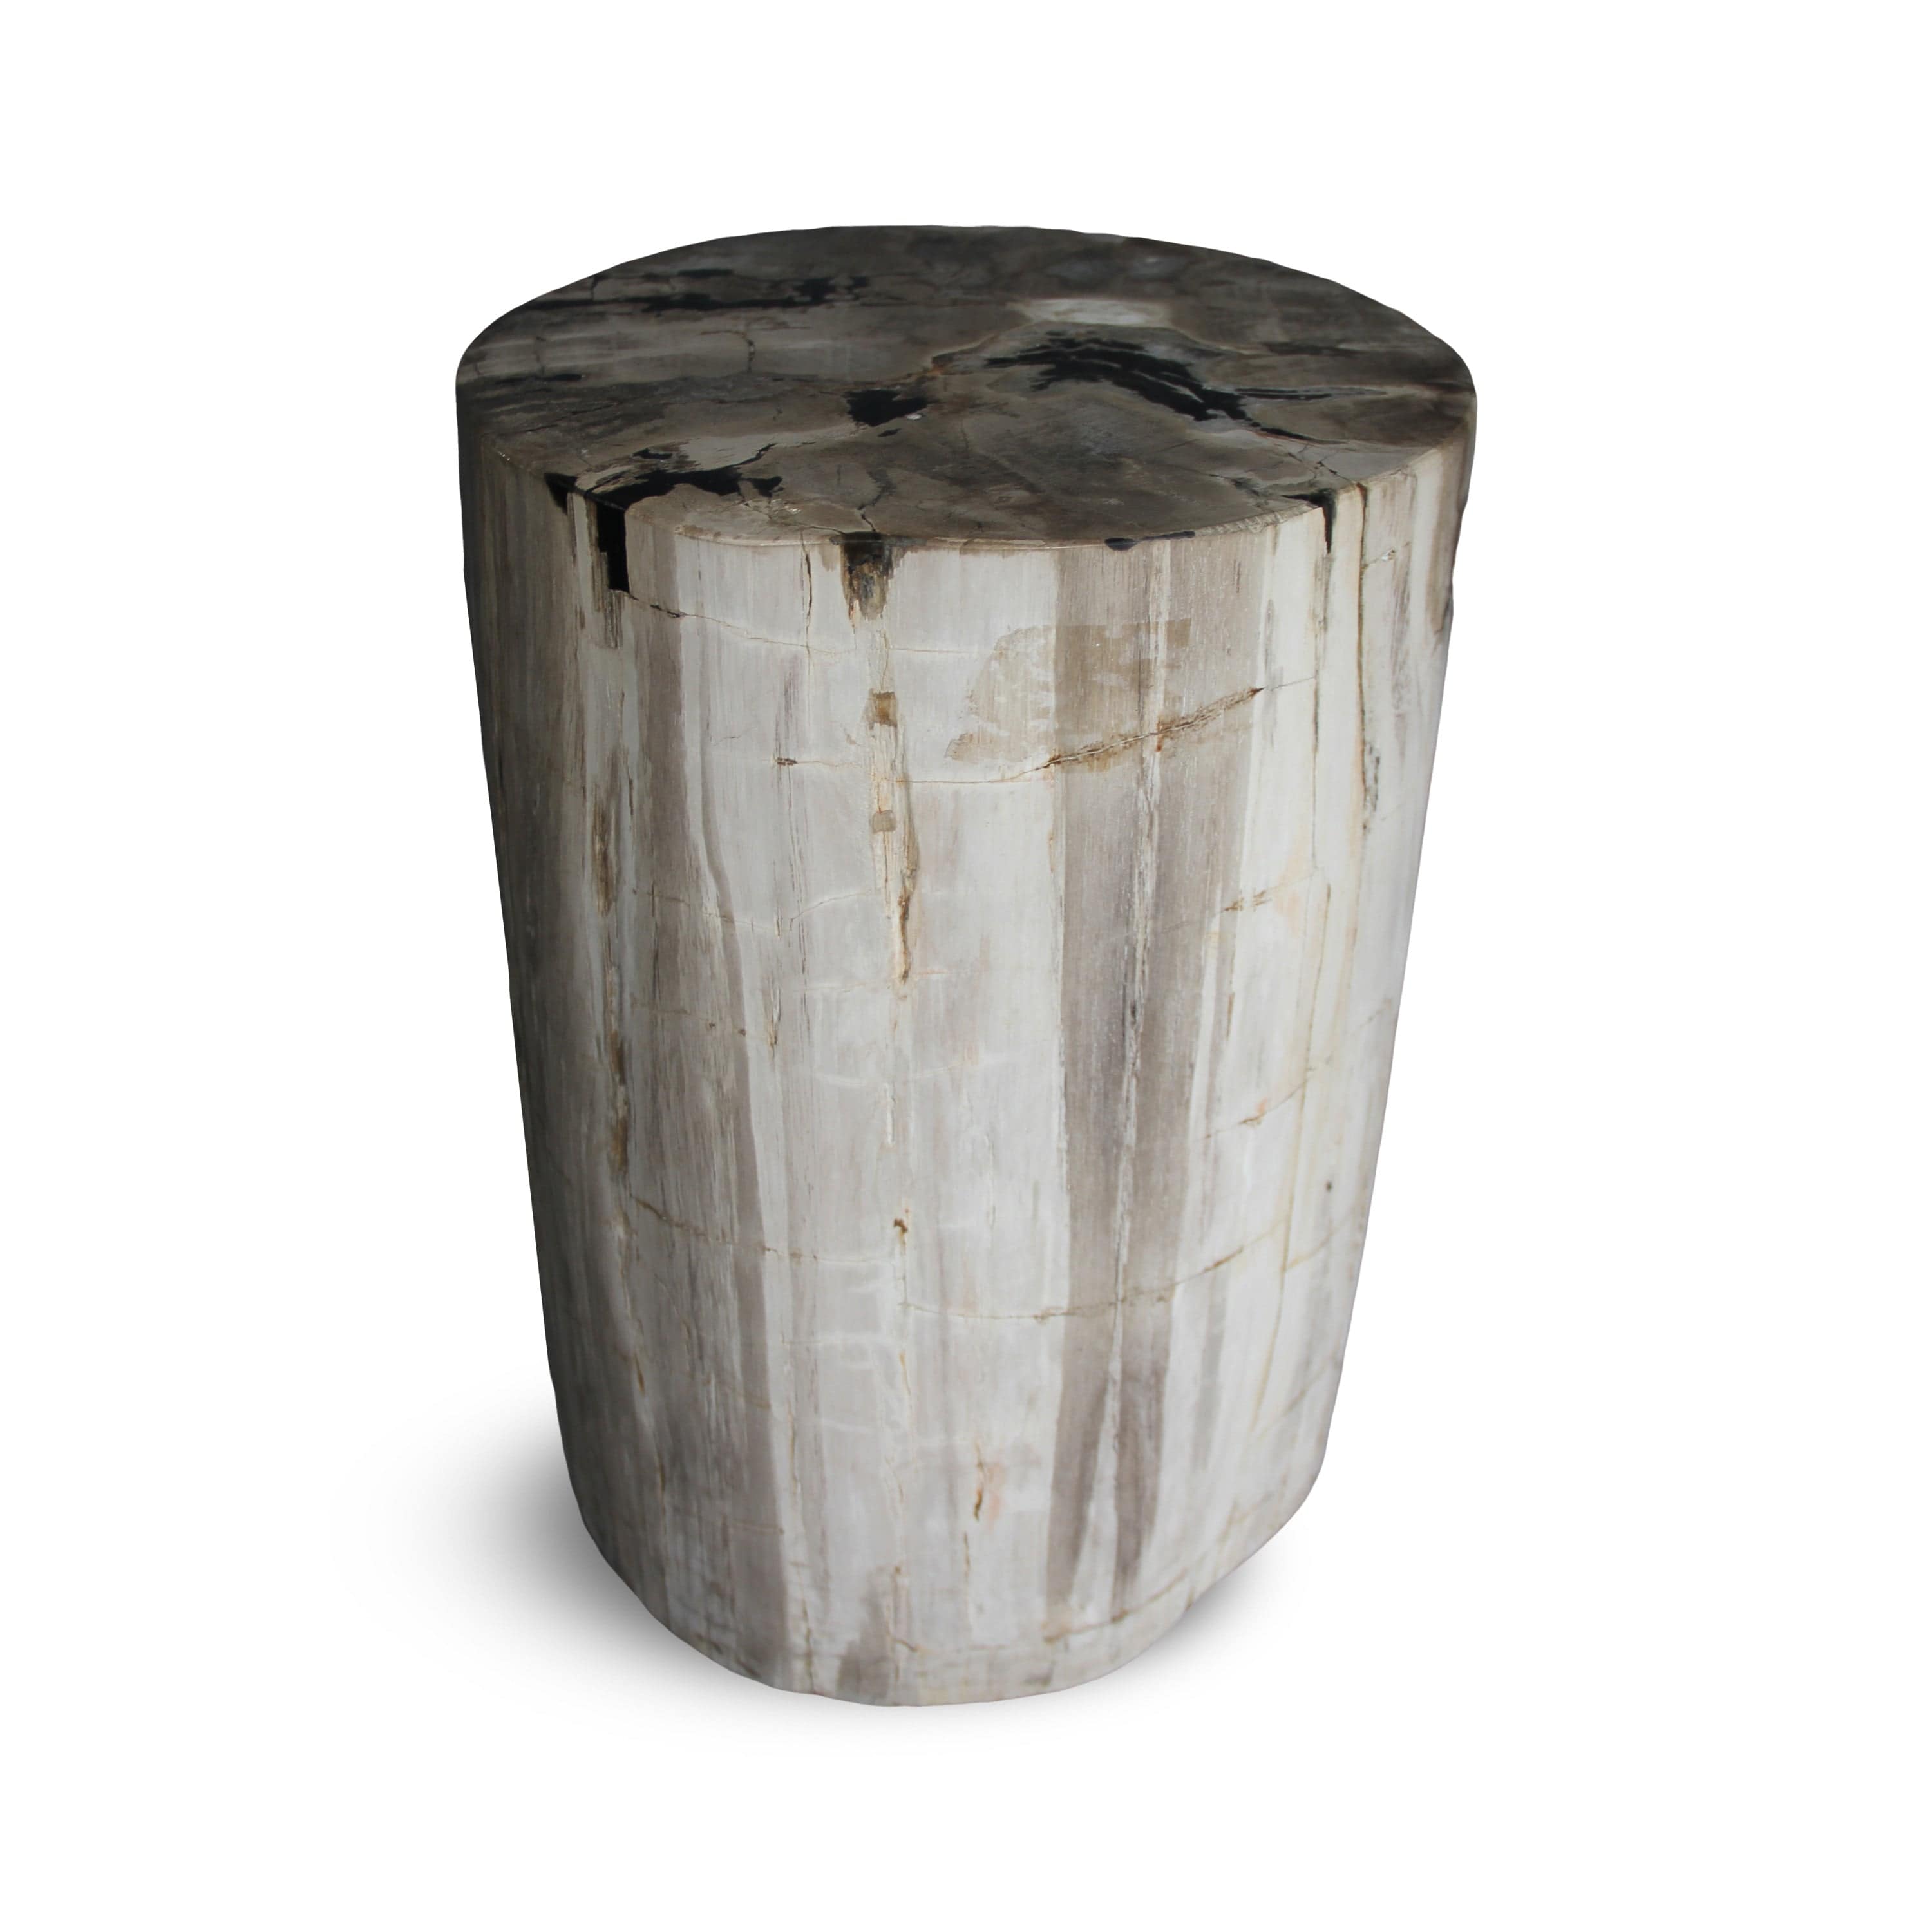 Kalifano Petrified Wood Petrified Wood Round Stump / Stool from Indonesia - 16" / 136 lbs PWS2600.006